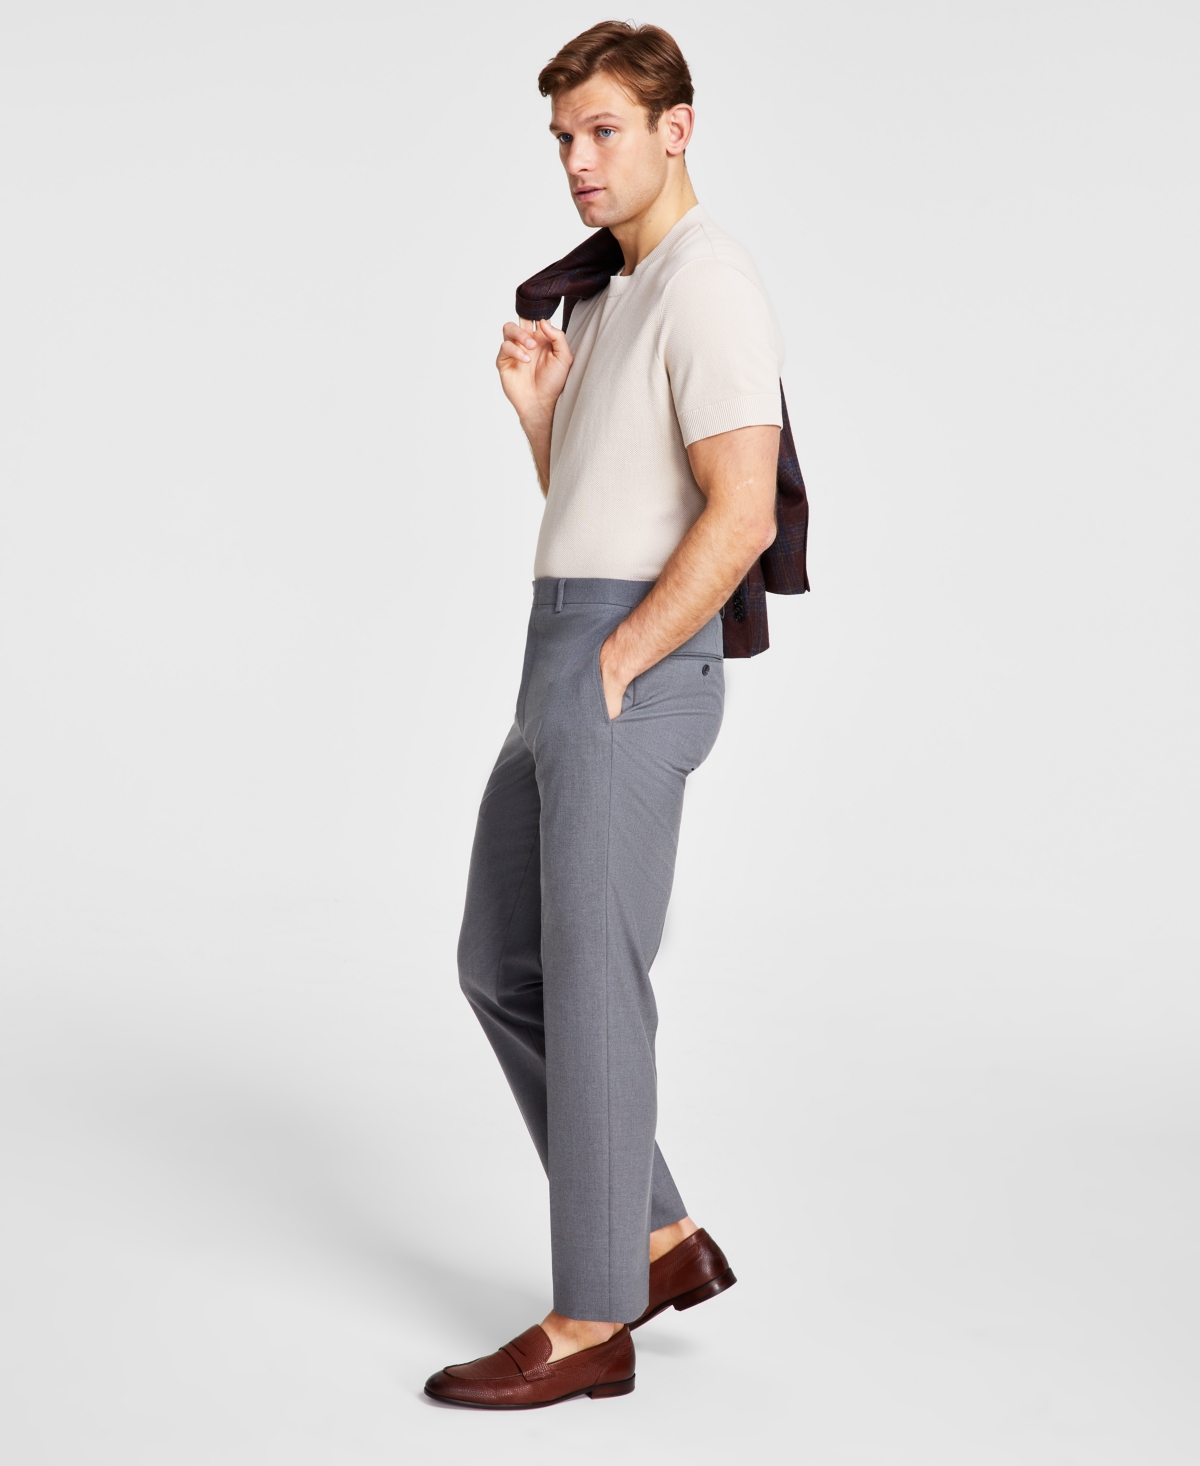 Michael Kors Men's Classic Fit Performance Dress Pants In Gray